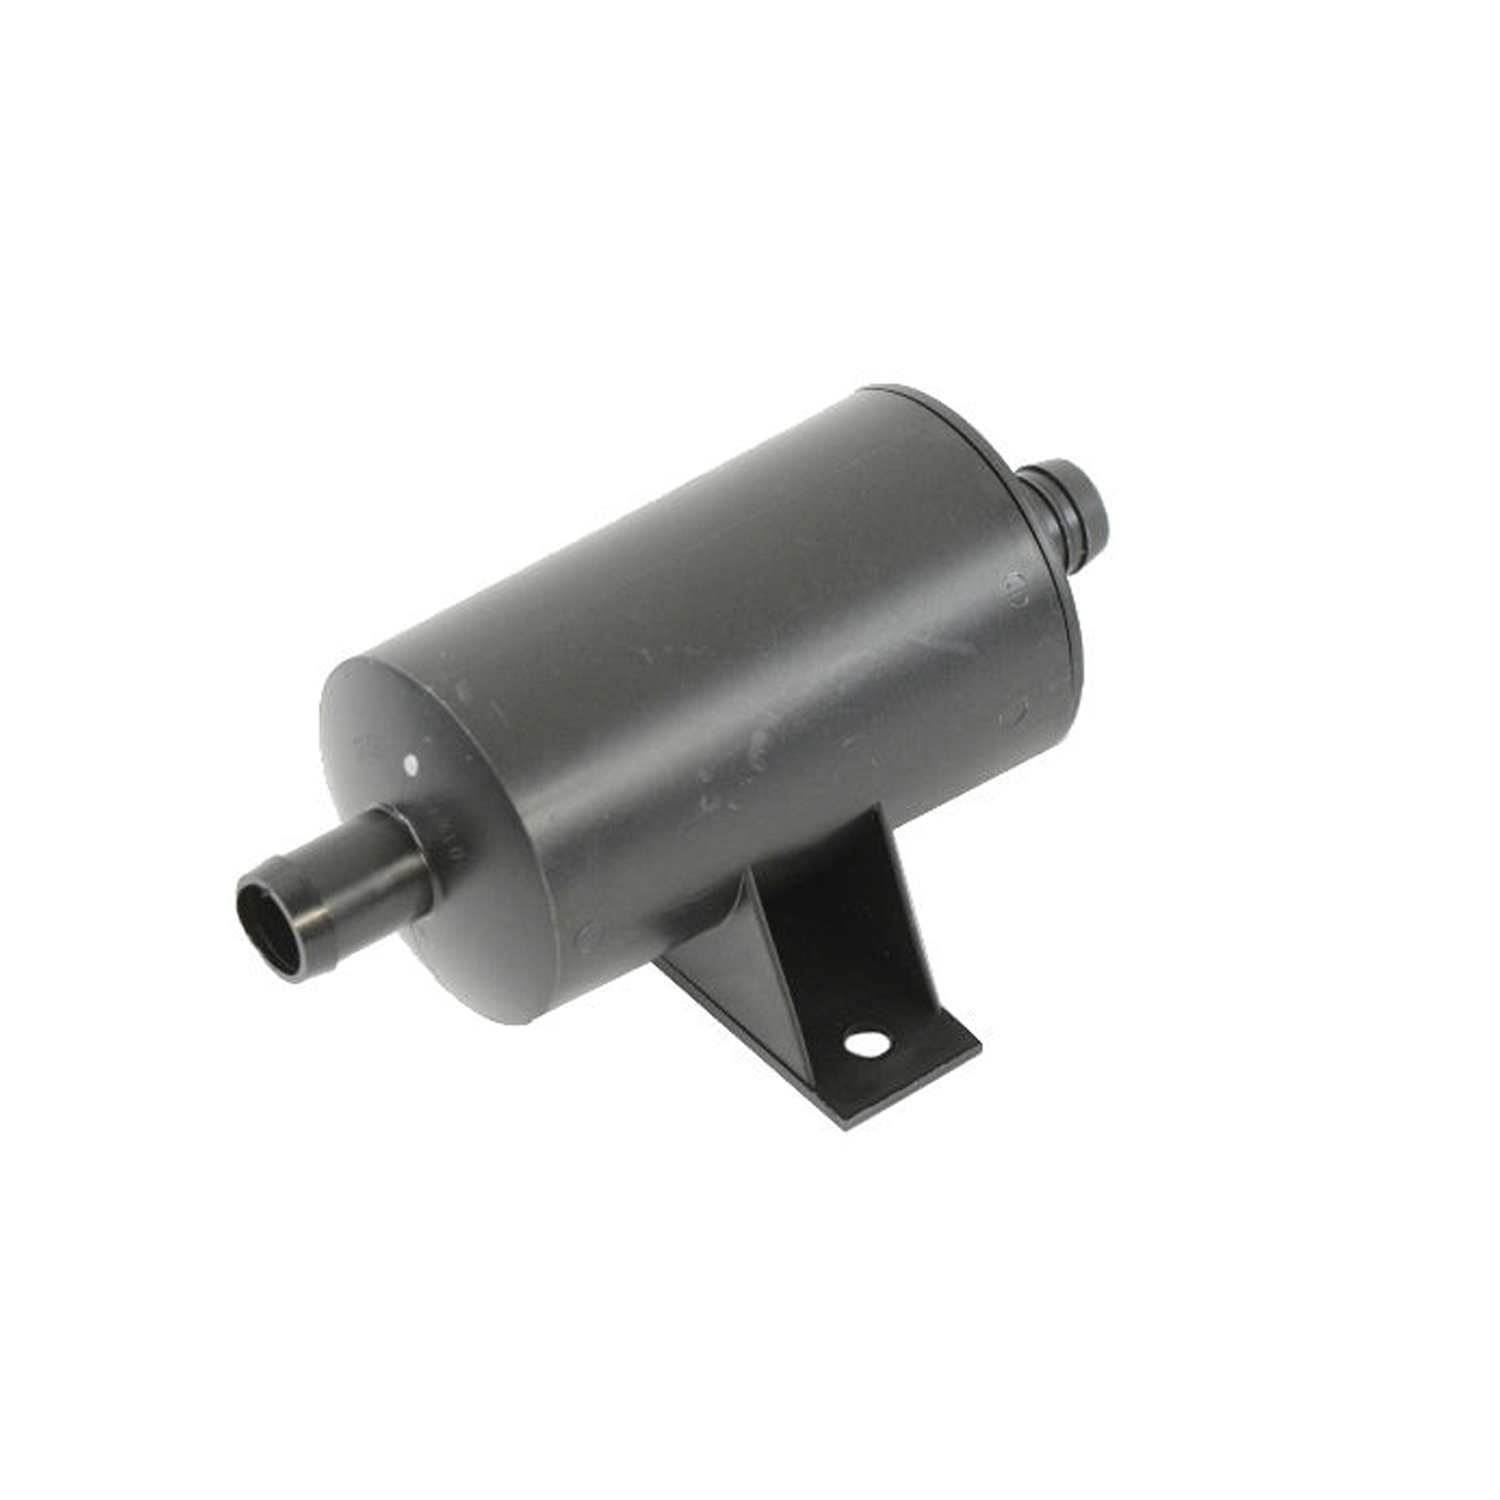 MOPAR BRAND - Fuel Vapor Leak Detection Pump Filter - MPB 4891561AA